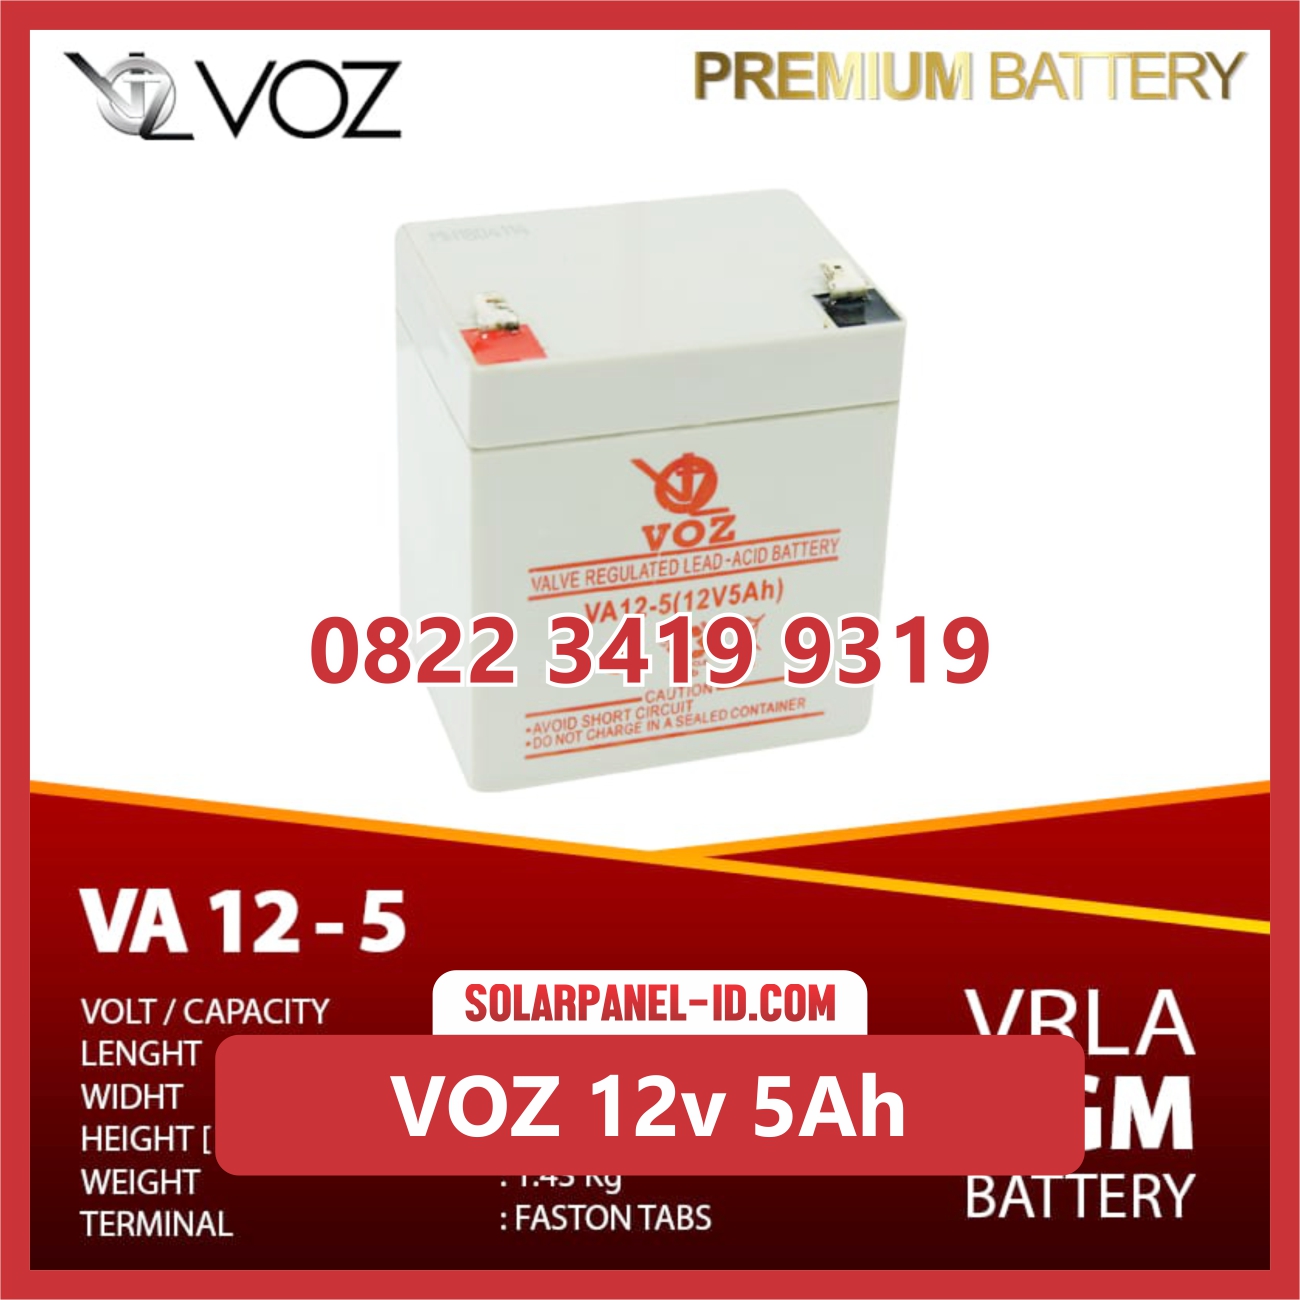 VOZ baterai kering 12v 5Ah baterai ups